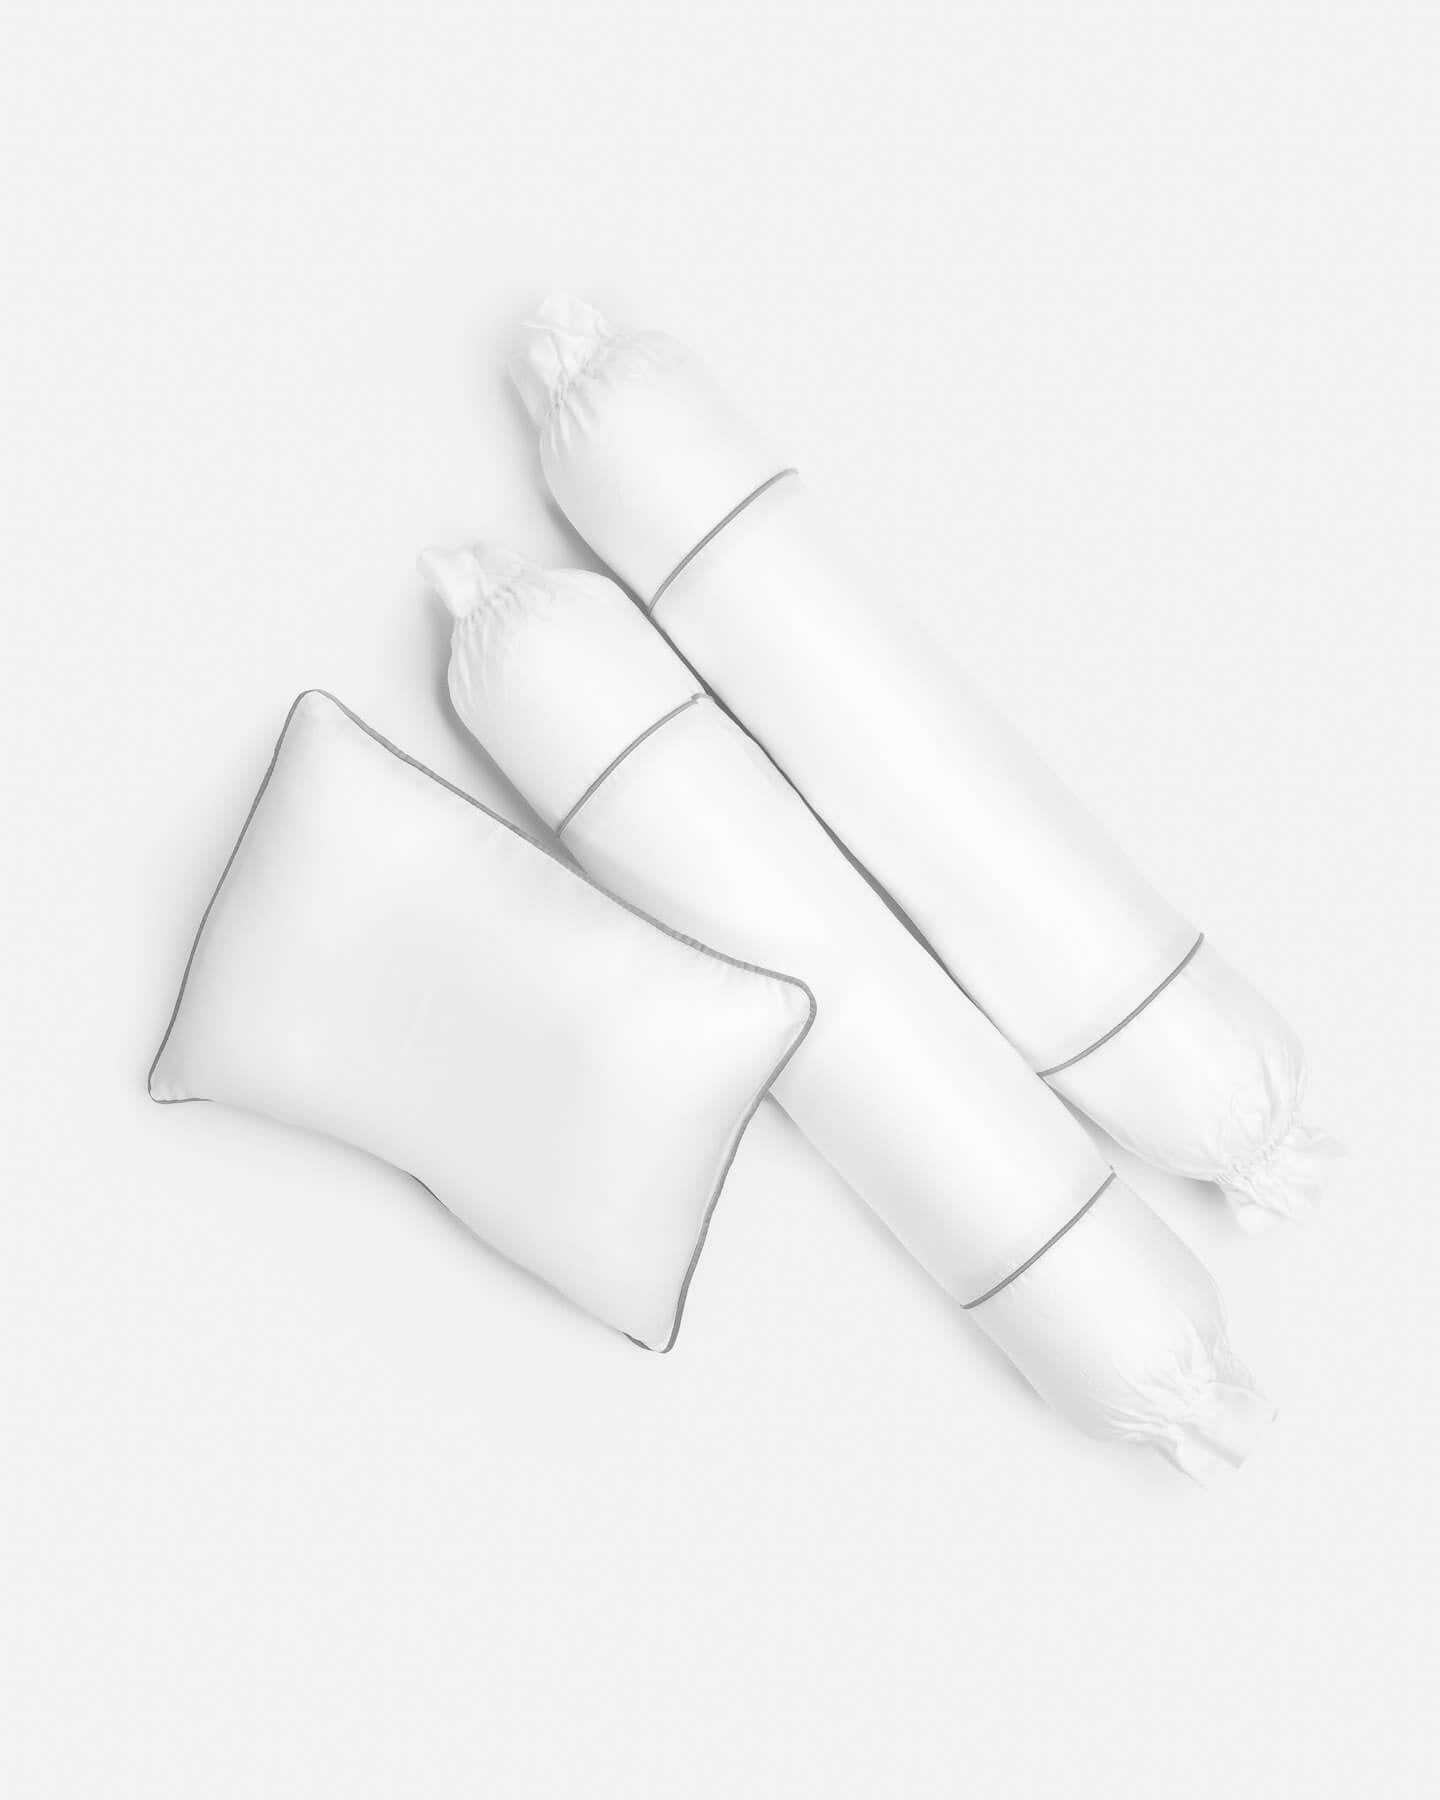 ava and ava ph organic bamboo lyocell baby pillowcase set - pillowcase, 2 bolstercases in daydream blush (white with gray piping)